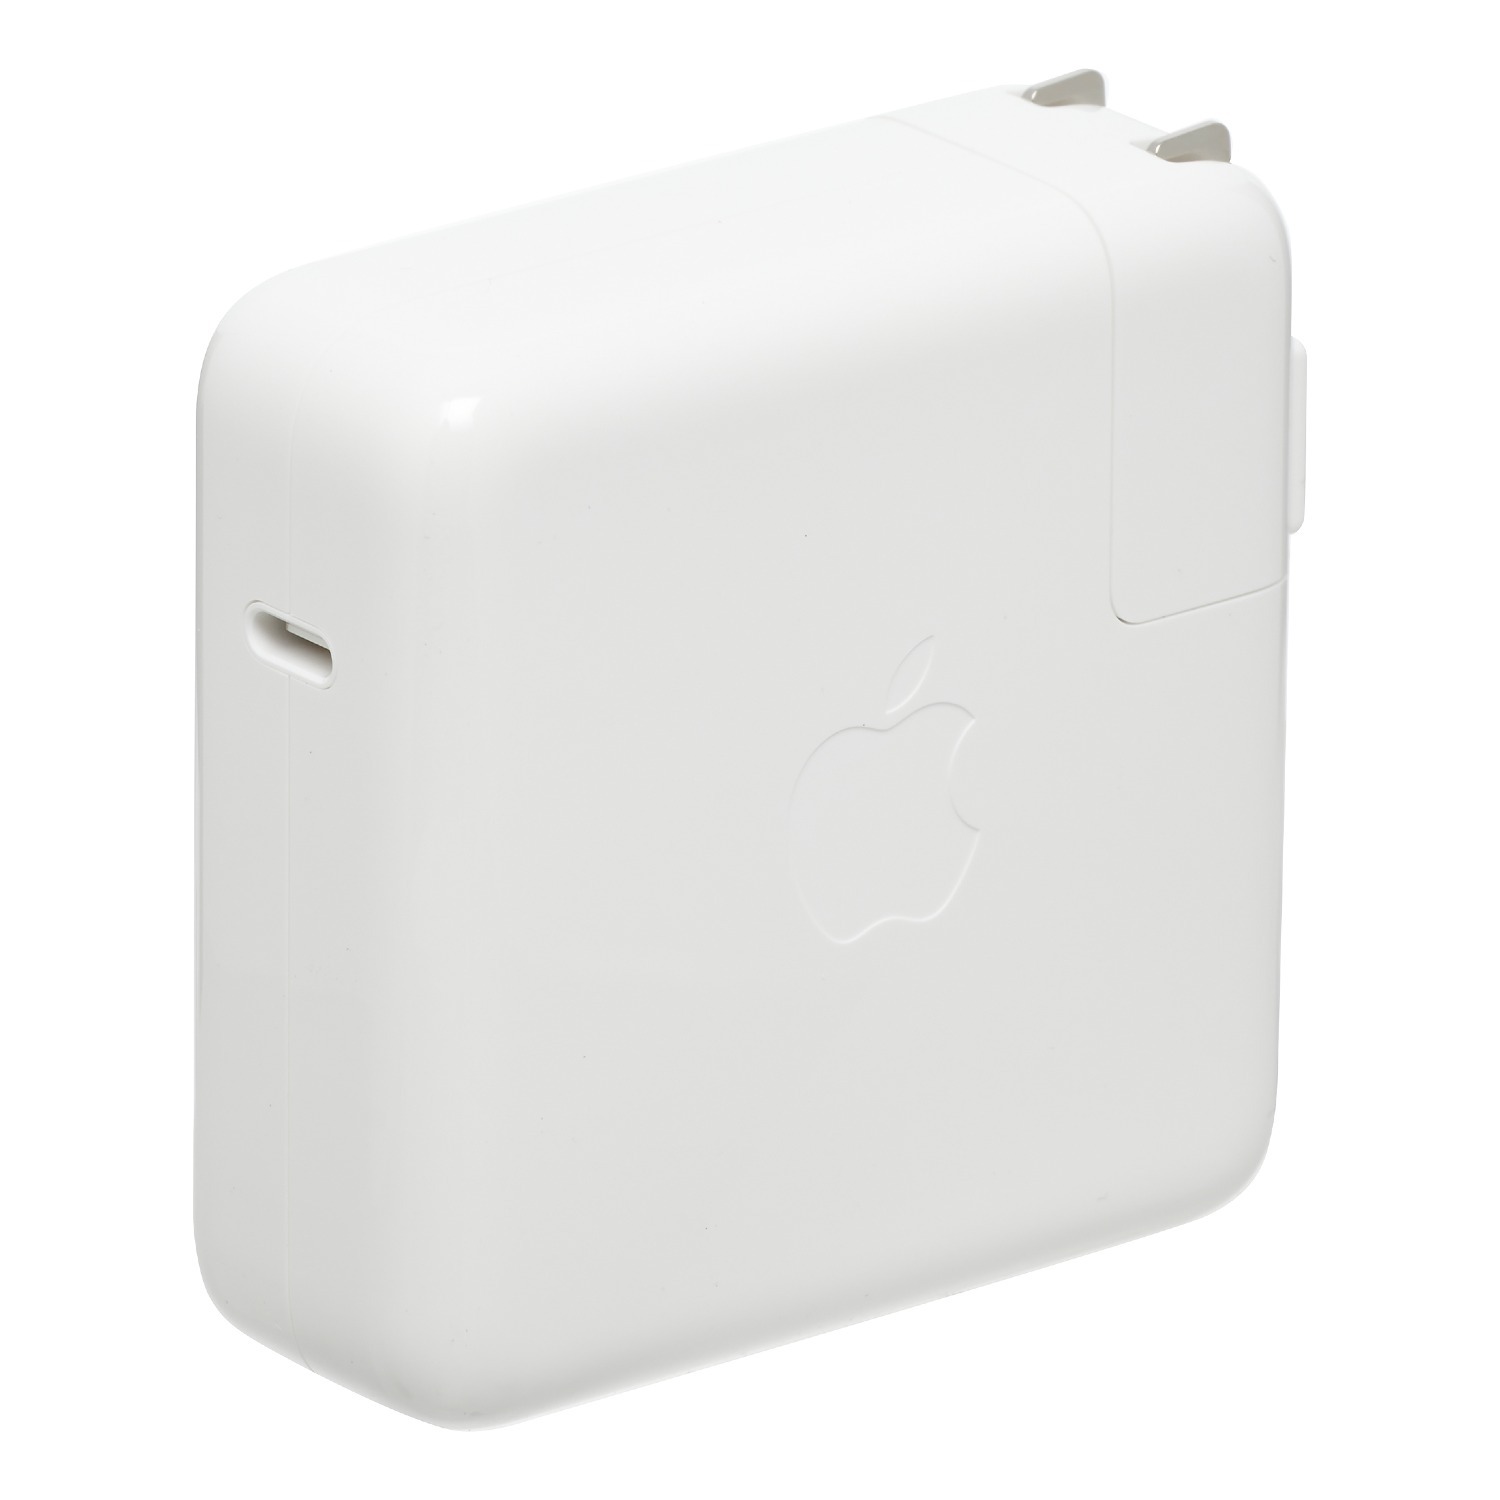 Apple 61 Watt USB-C Power Adapter OEM w/ 2M USB-C Cable (Refurbished) $29 + Free Shipping